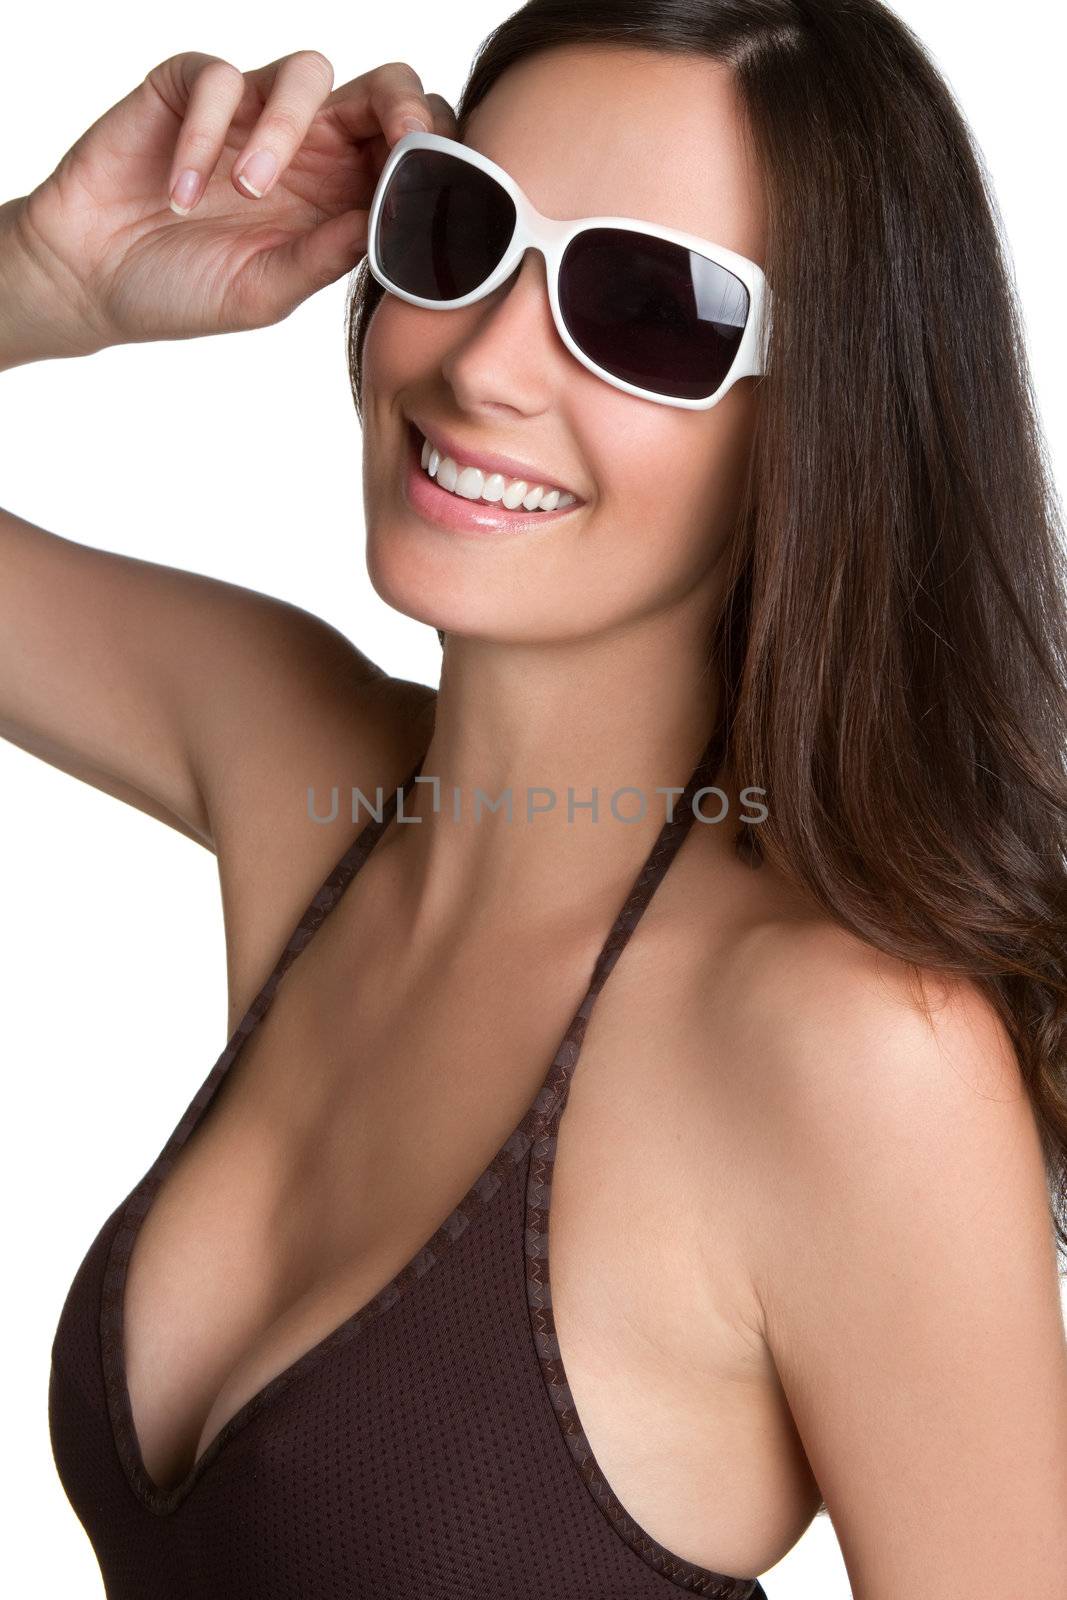 Beautiful bikini woman wearing sunglasses